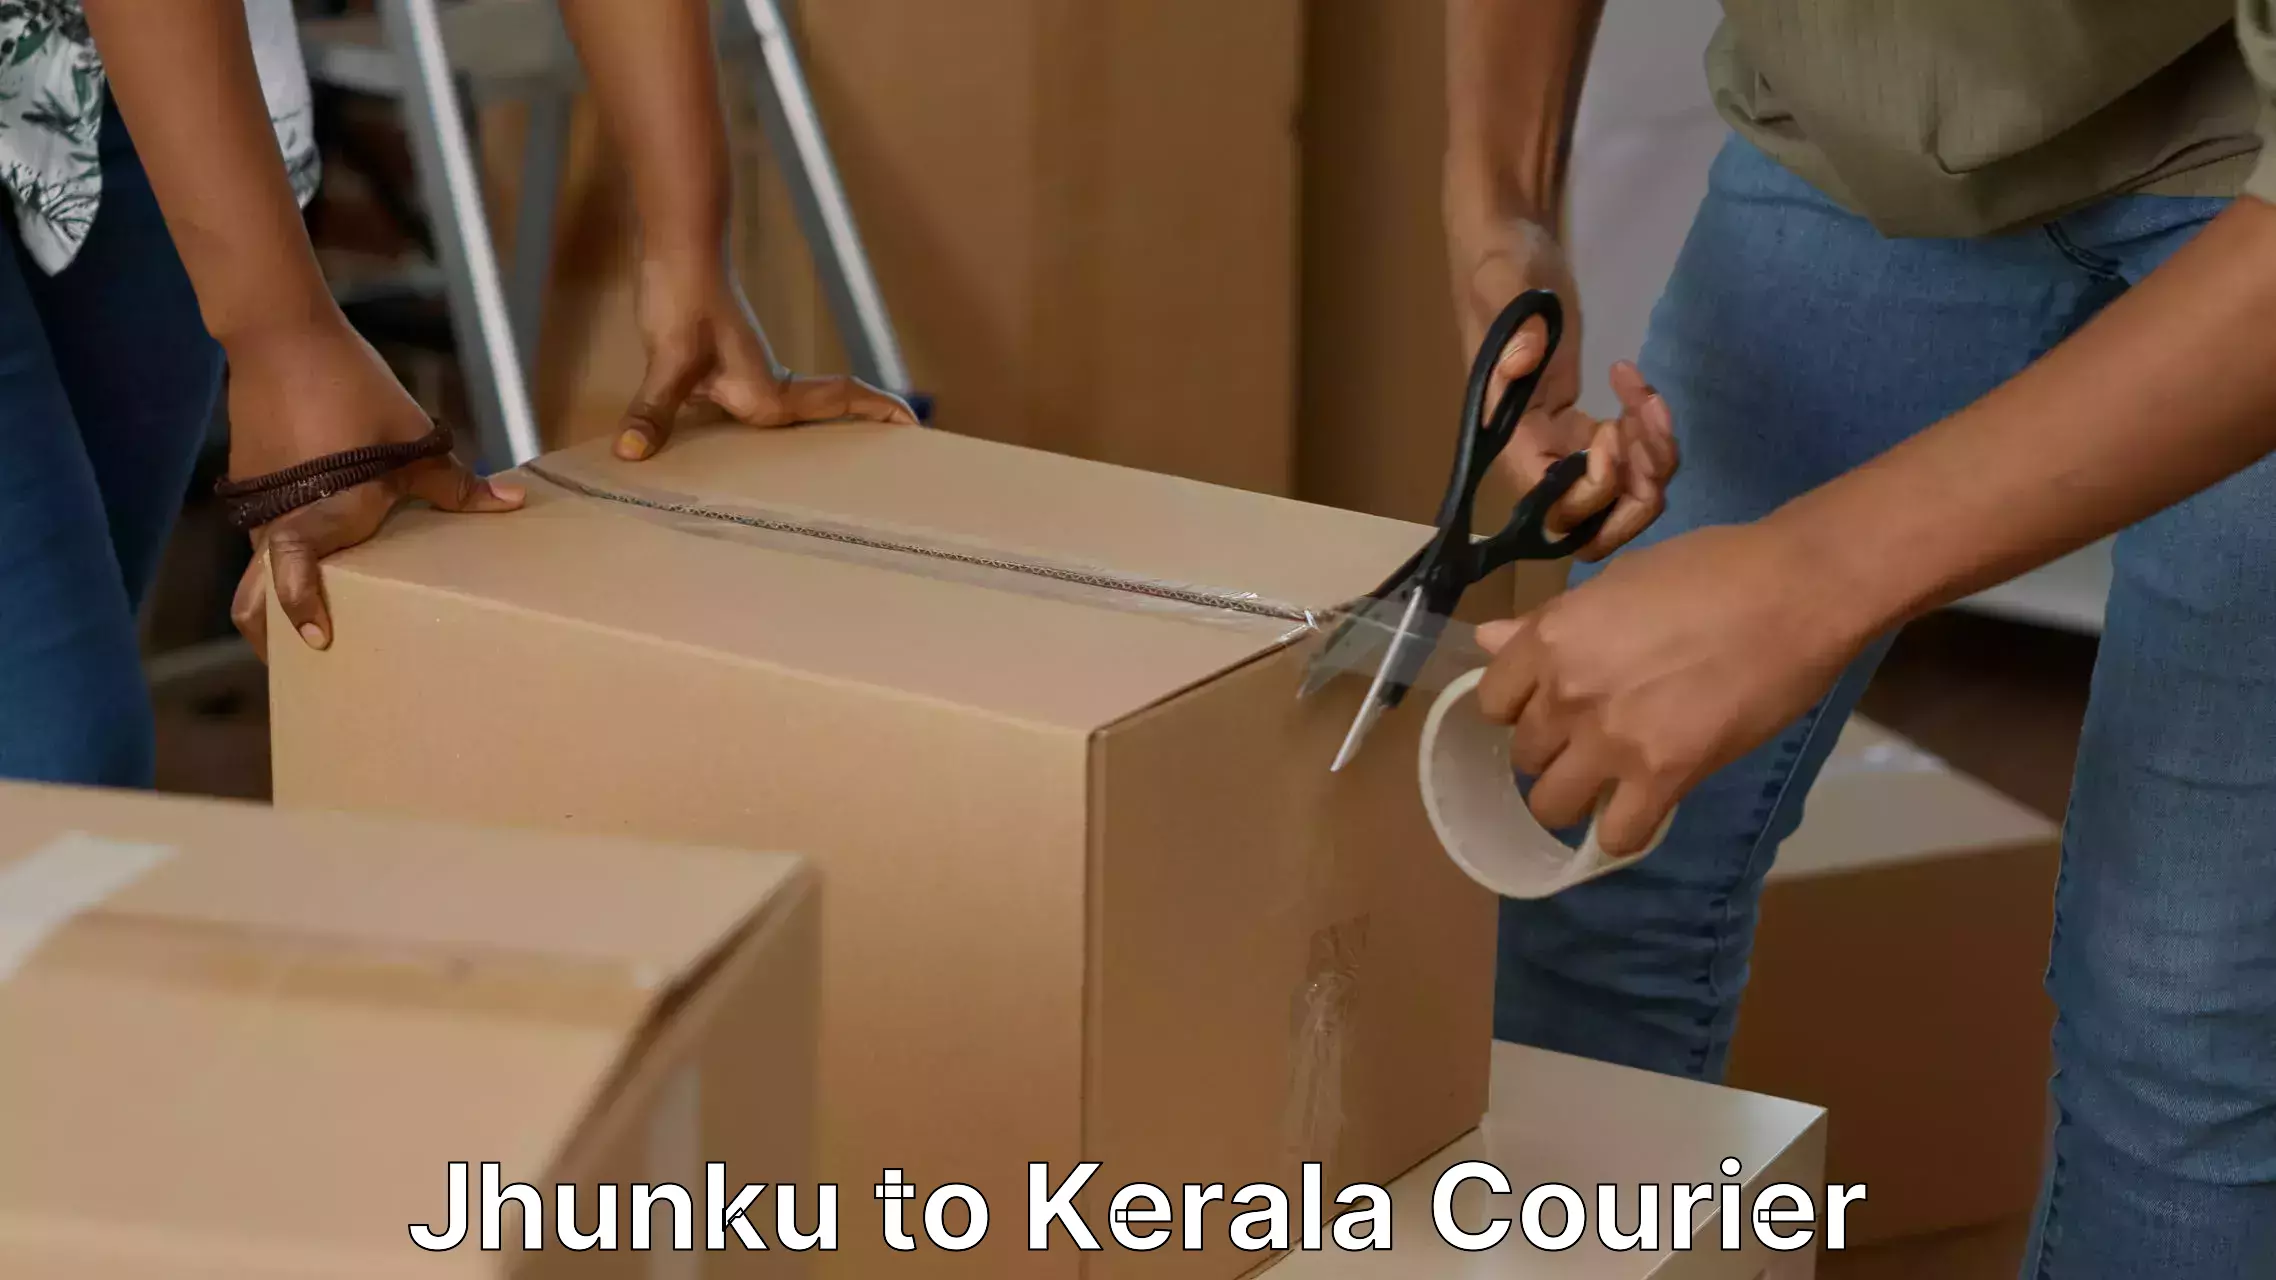 Furniture transport service Jhunku to Kerala